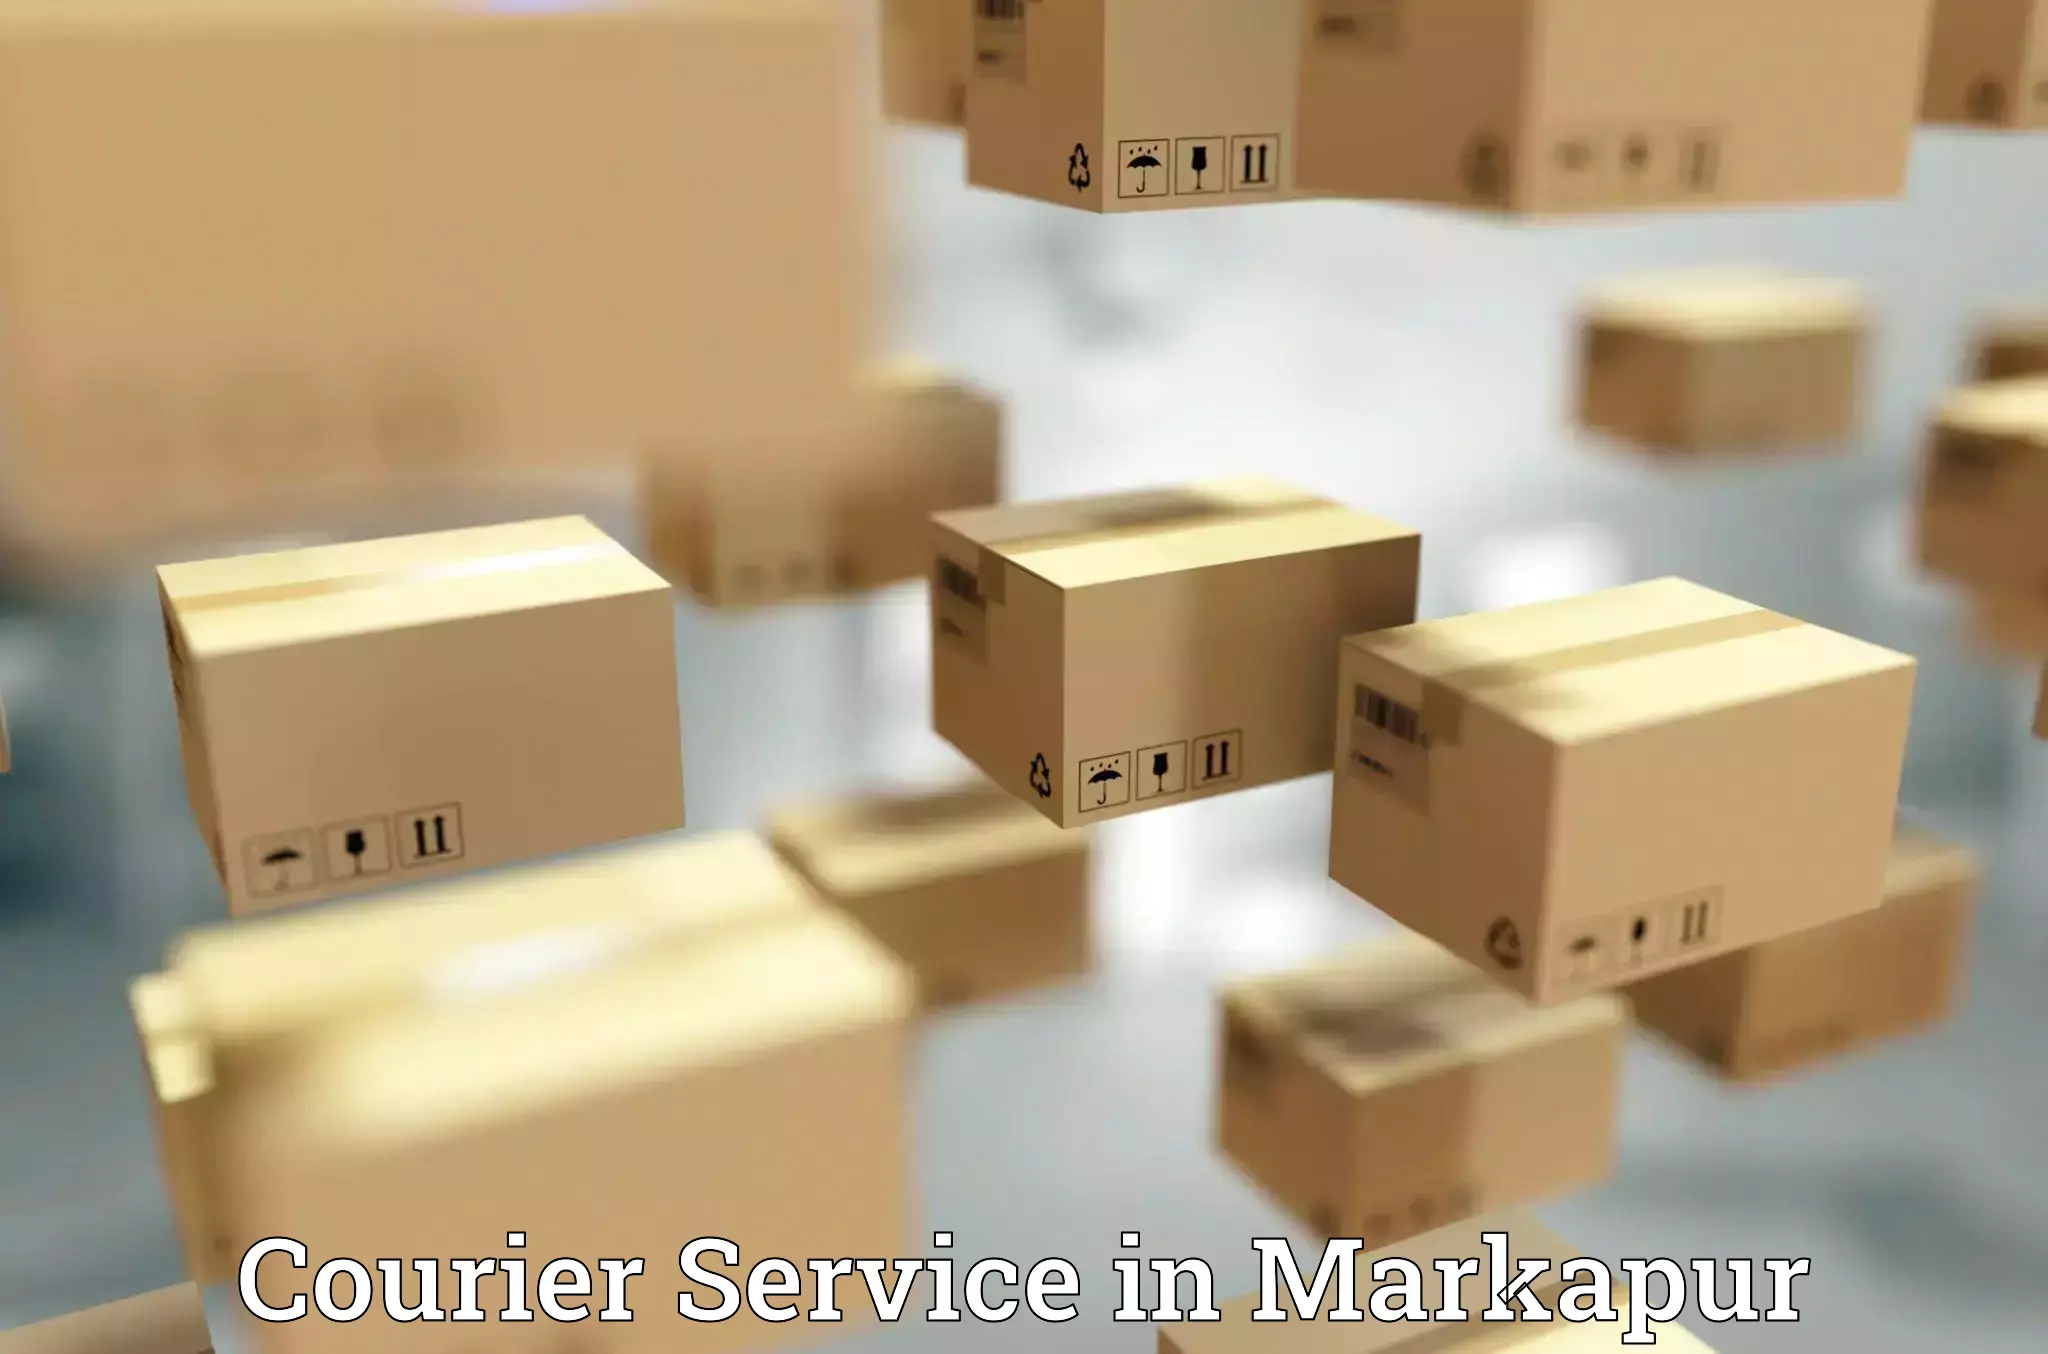 Logistics solutions in Markapur